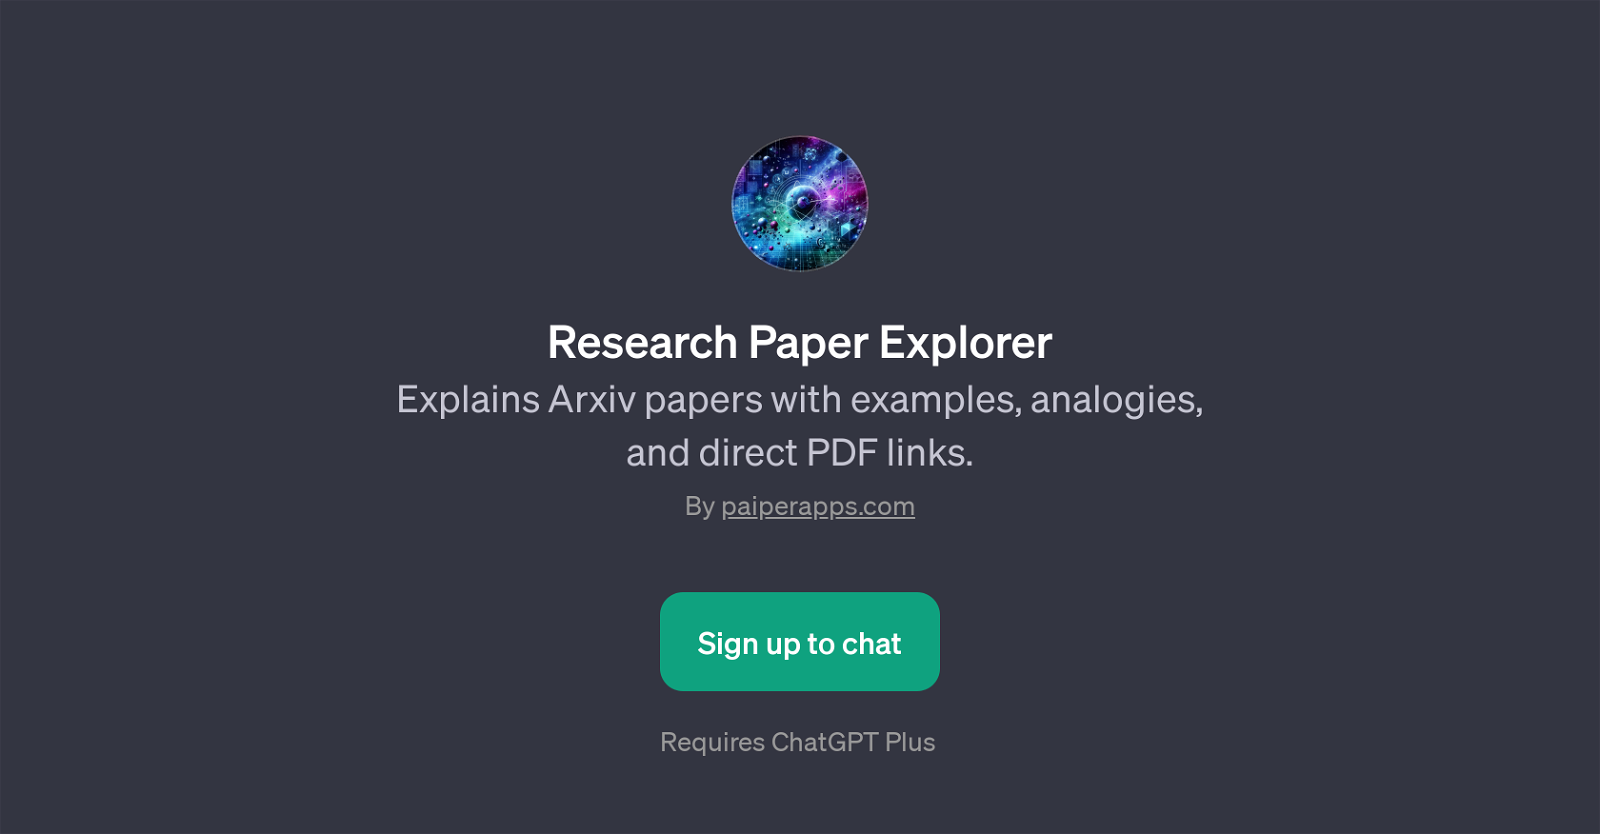 Research Paper Explorer website